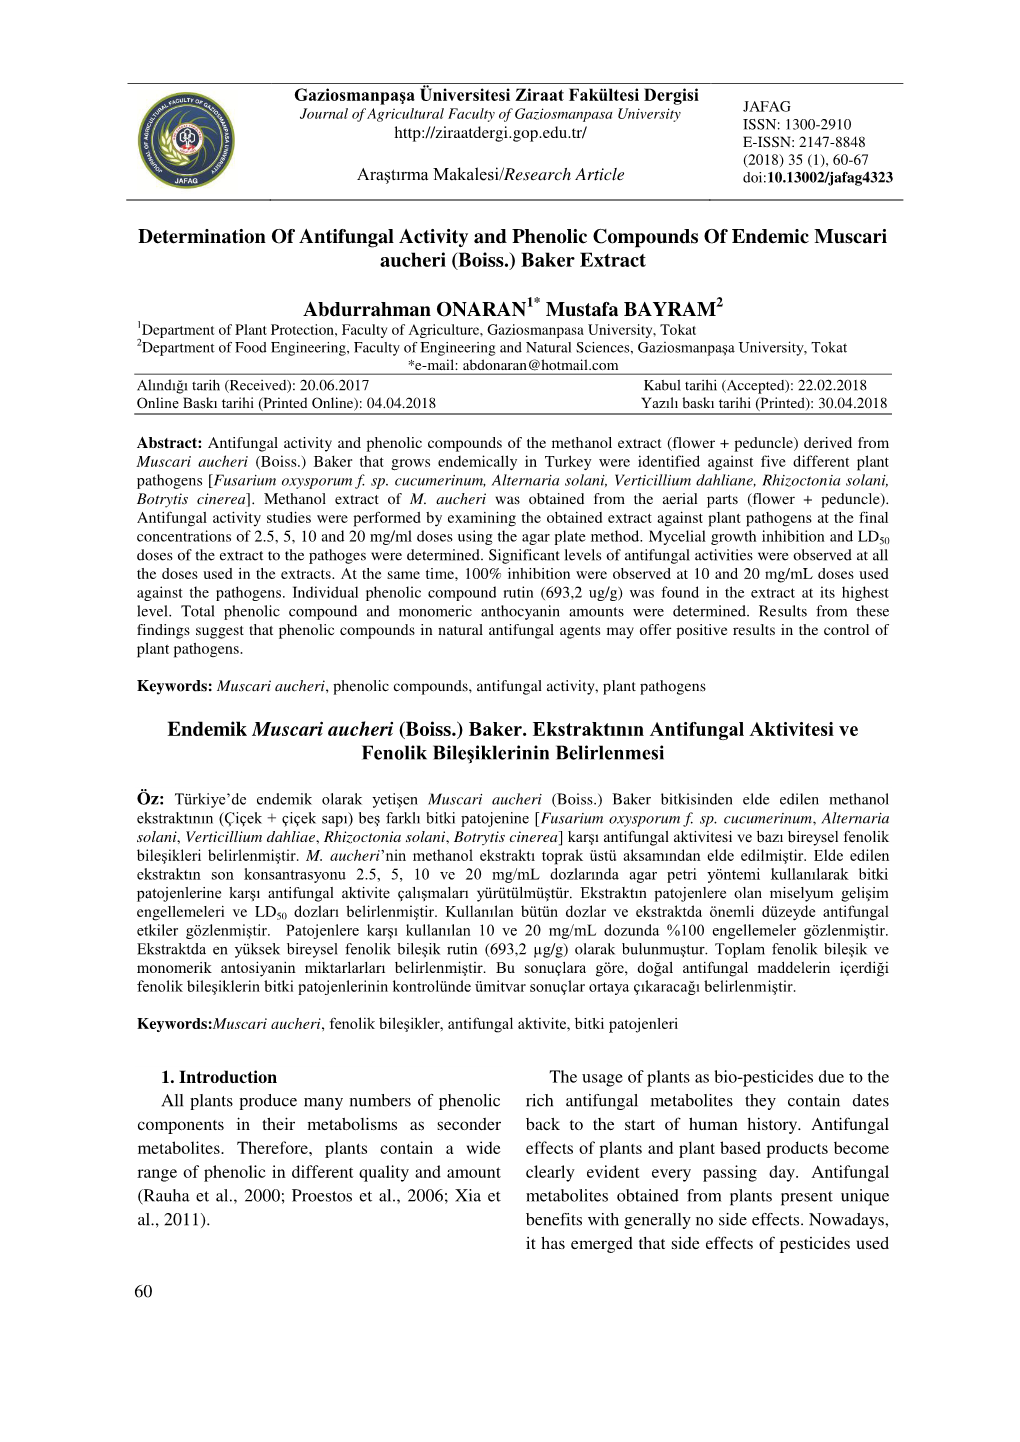 Determination of Antifungal Activity and Phenolic Compounds of Endemic Muscari Aucheri (Boiss.) Baker Extract